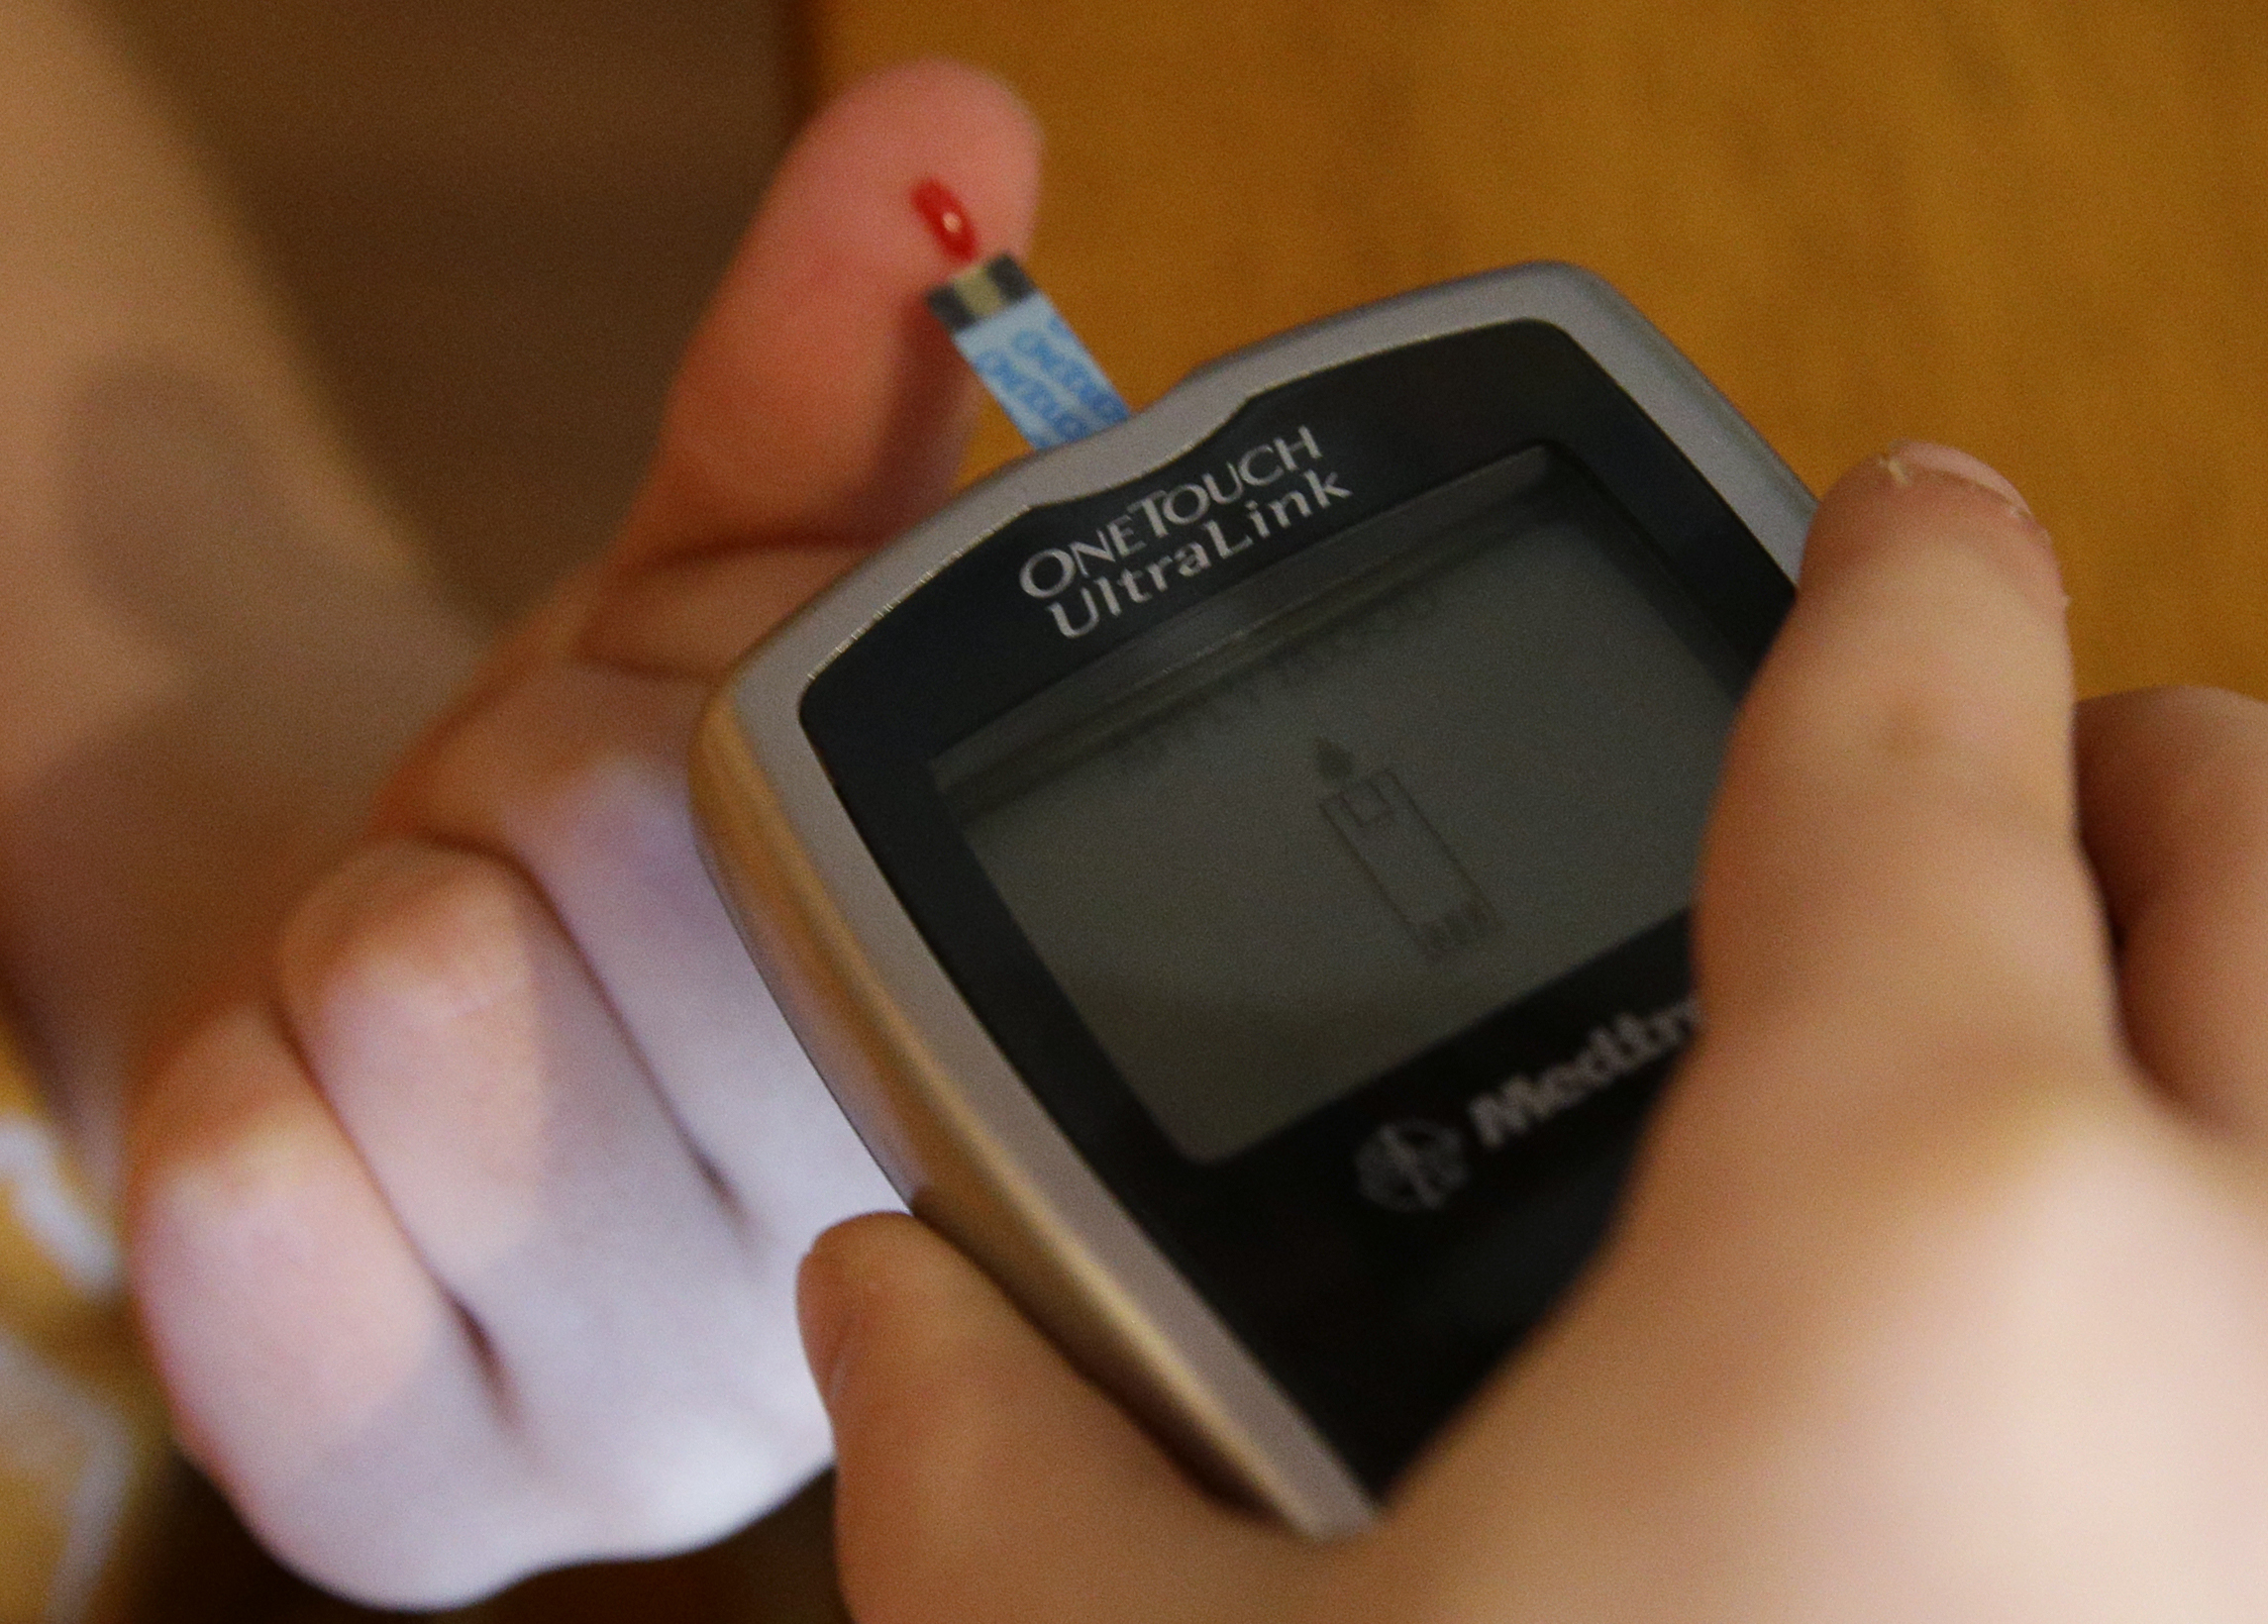 Boy with Type 1 diabetes pricks finger to test blood sugar levels